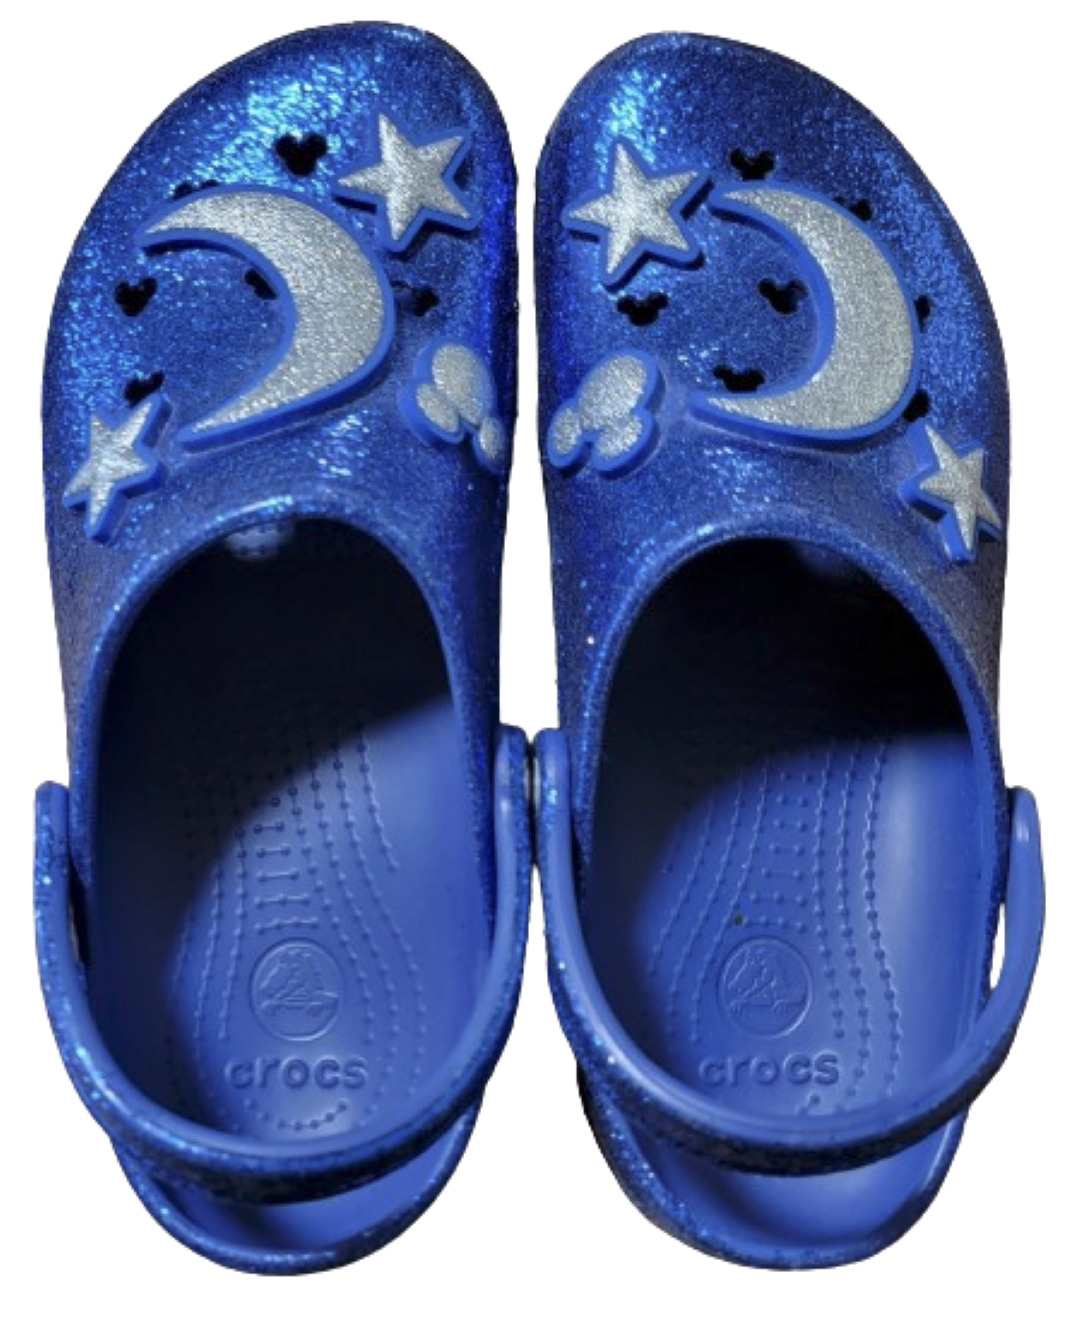 Disney Parks Sorcerer Mickey Make a Wish Blue Glitter Crocs Size M9 W11 US